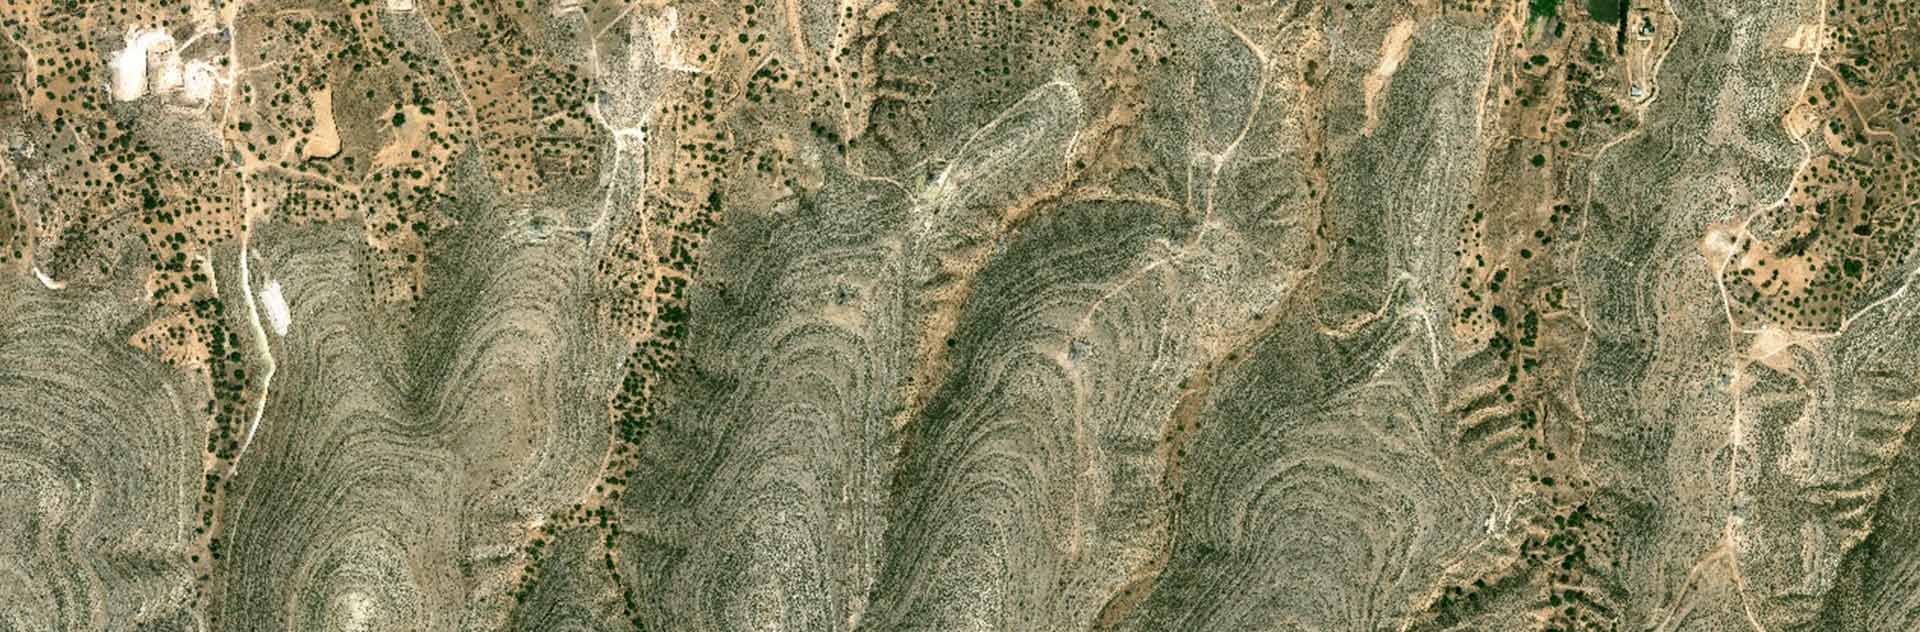 Pléiades Neo - Ashaafean Biosphere Reserve, Libya